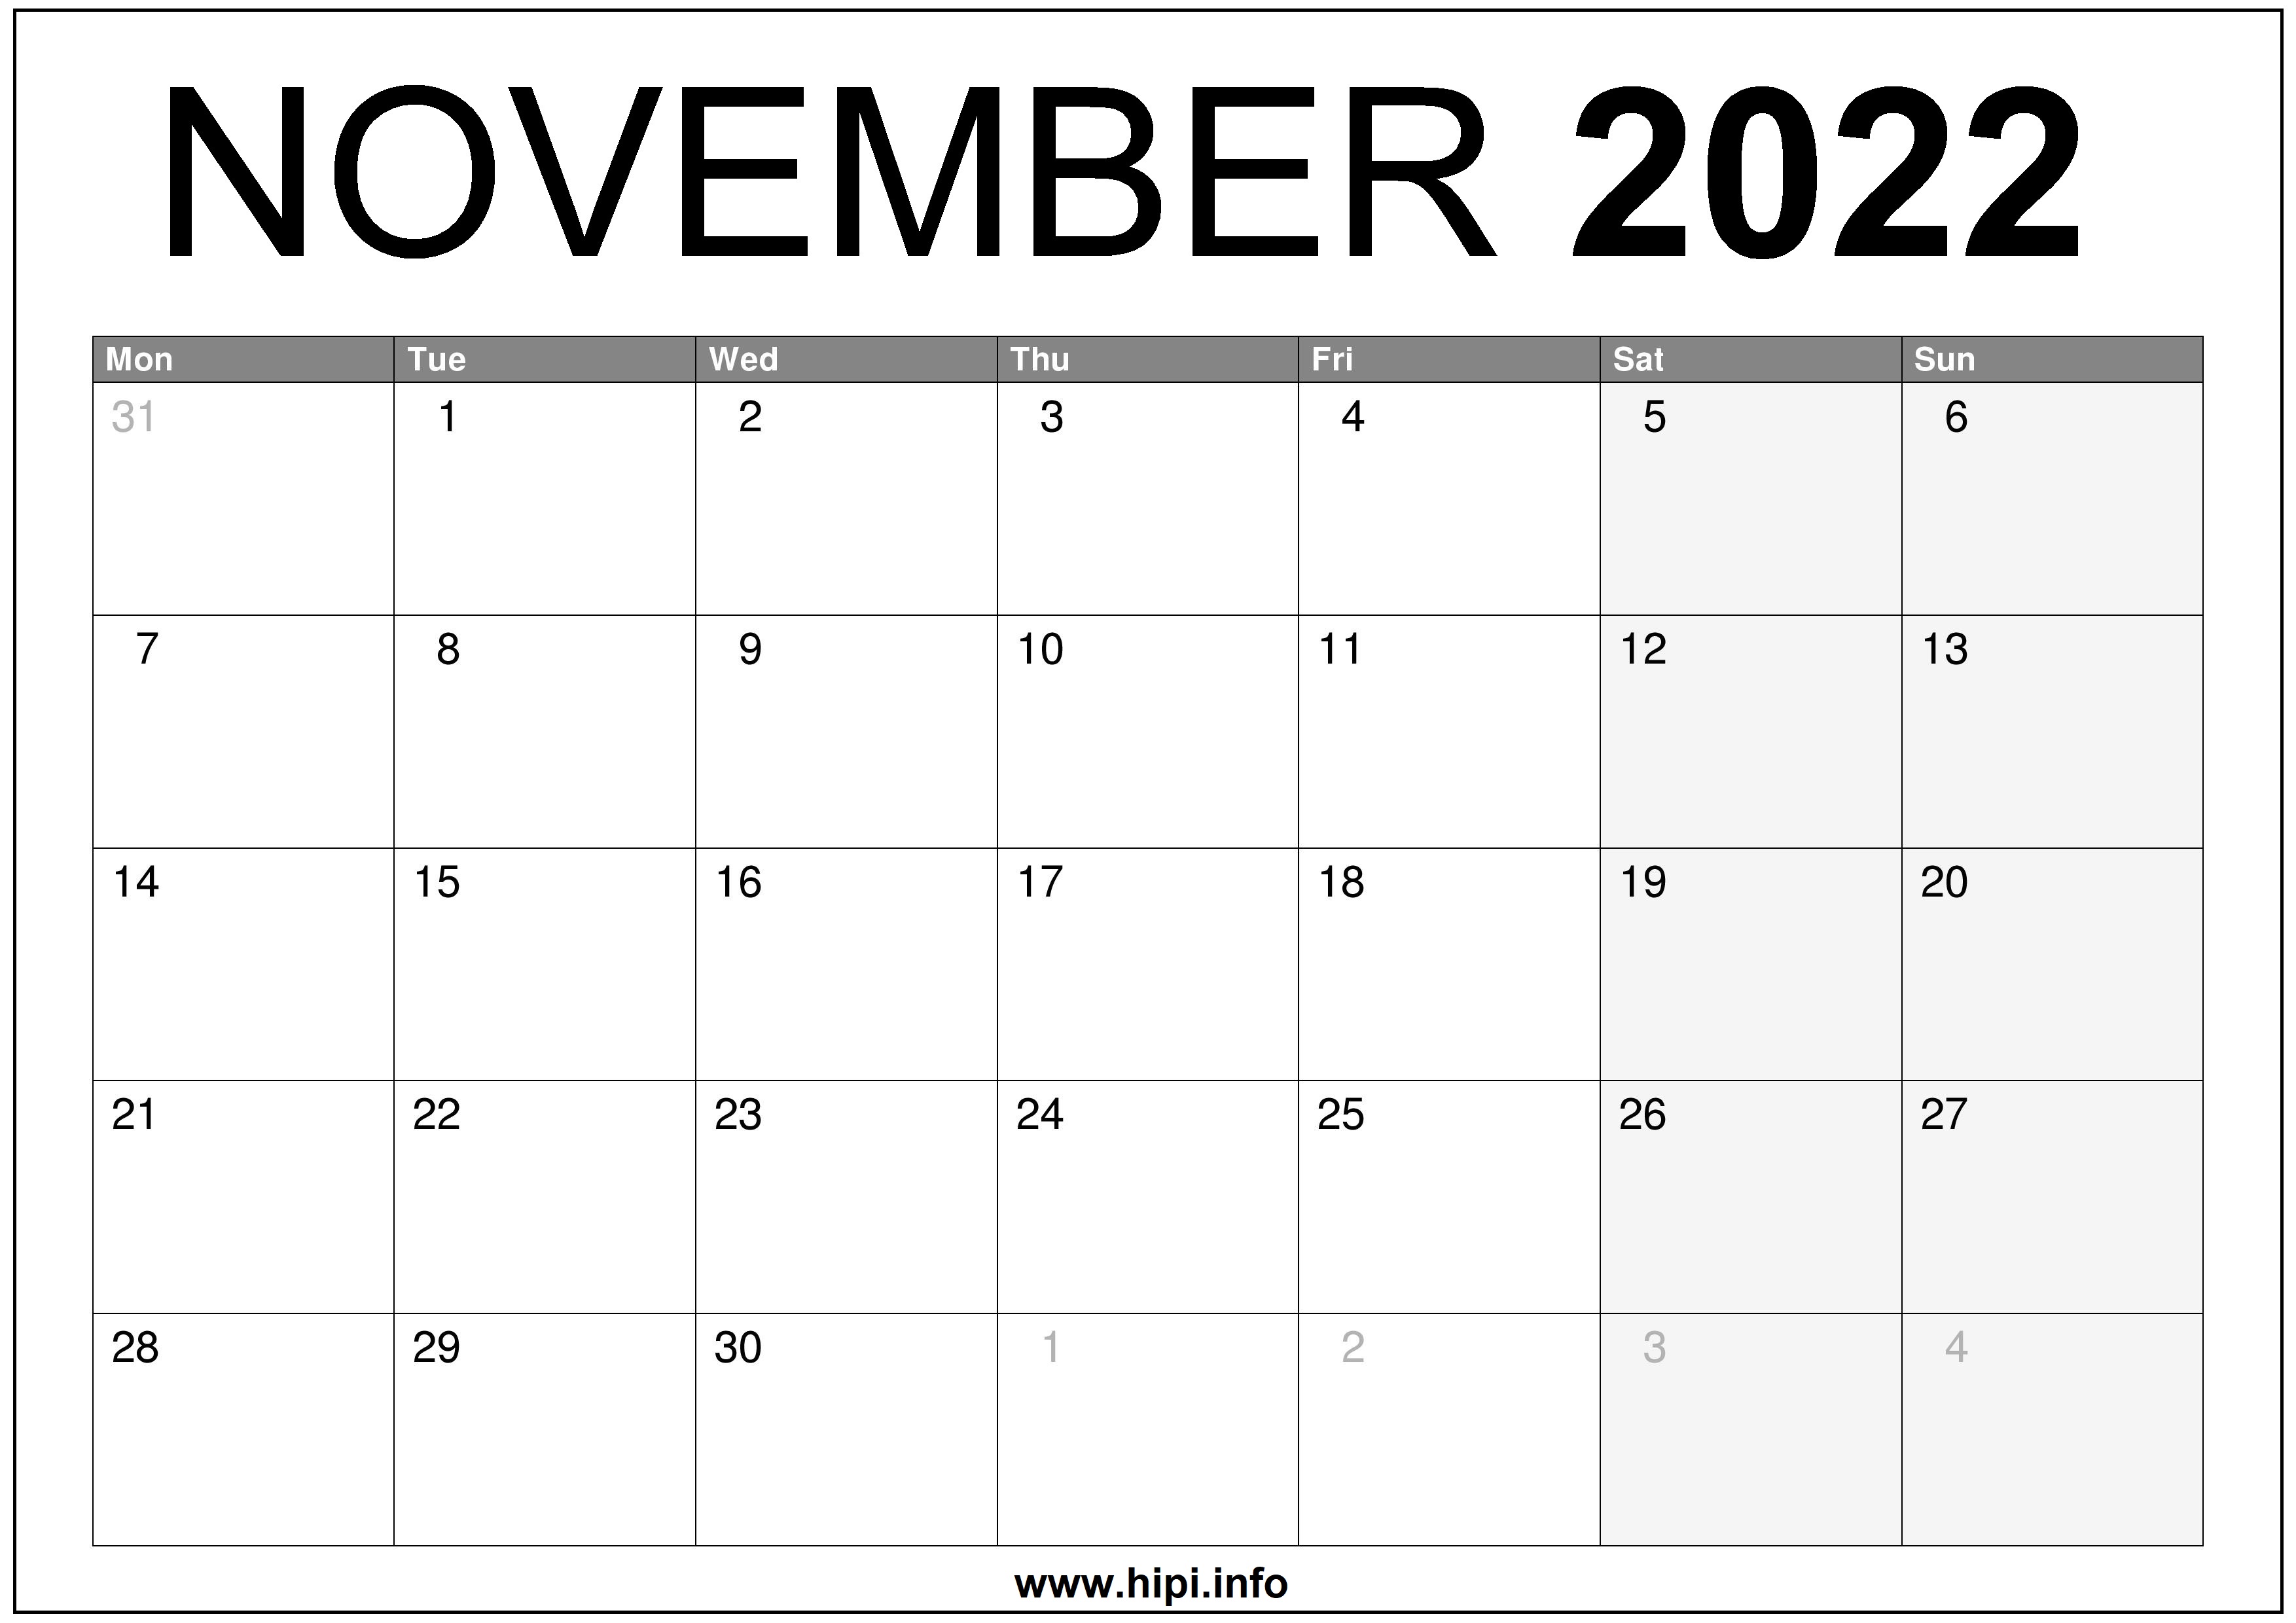 Free November Calendar 2022 November 2022 Uk Calendar Printable Free - Hipi.info | Calendars Printable  Free